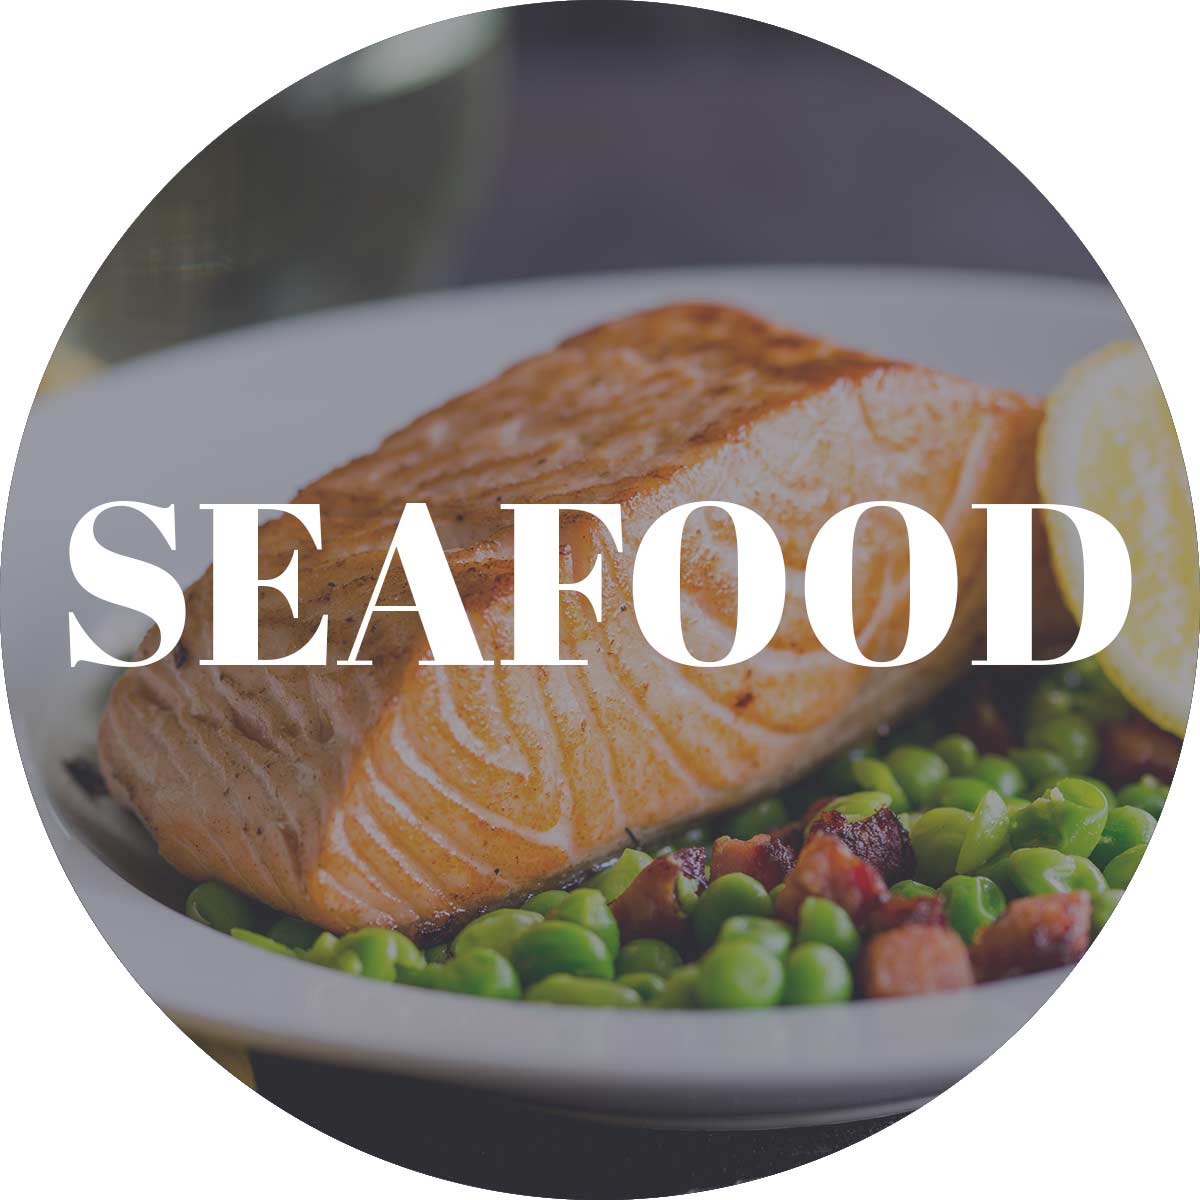 Fish & Seafood Recipes